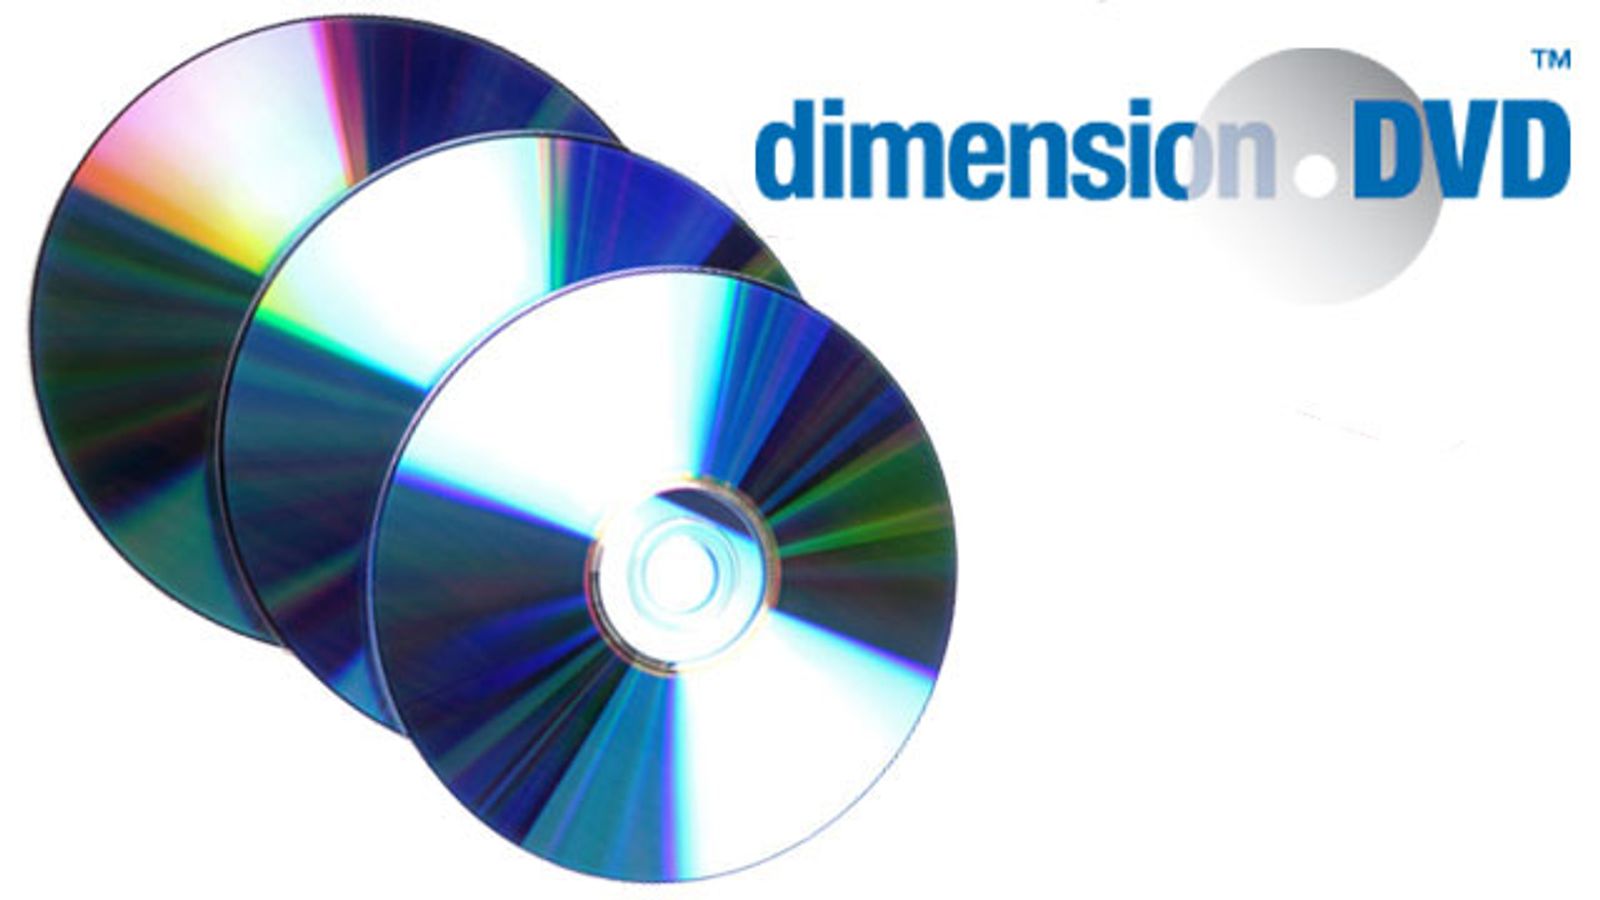 Dimension DVD Celebrates 10-Year Anniversary